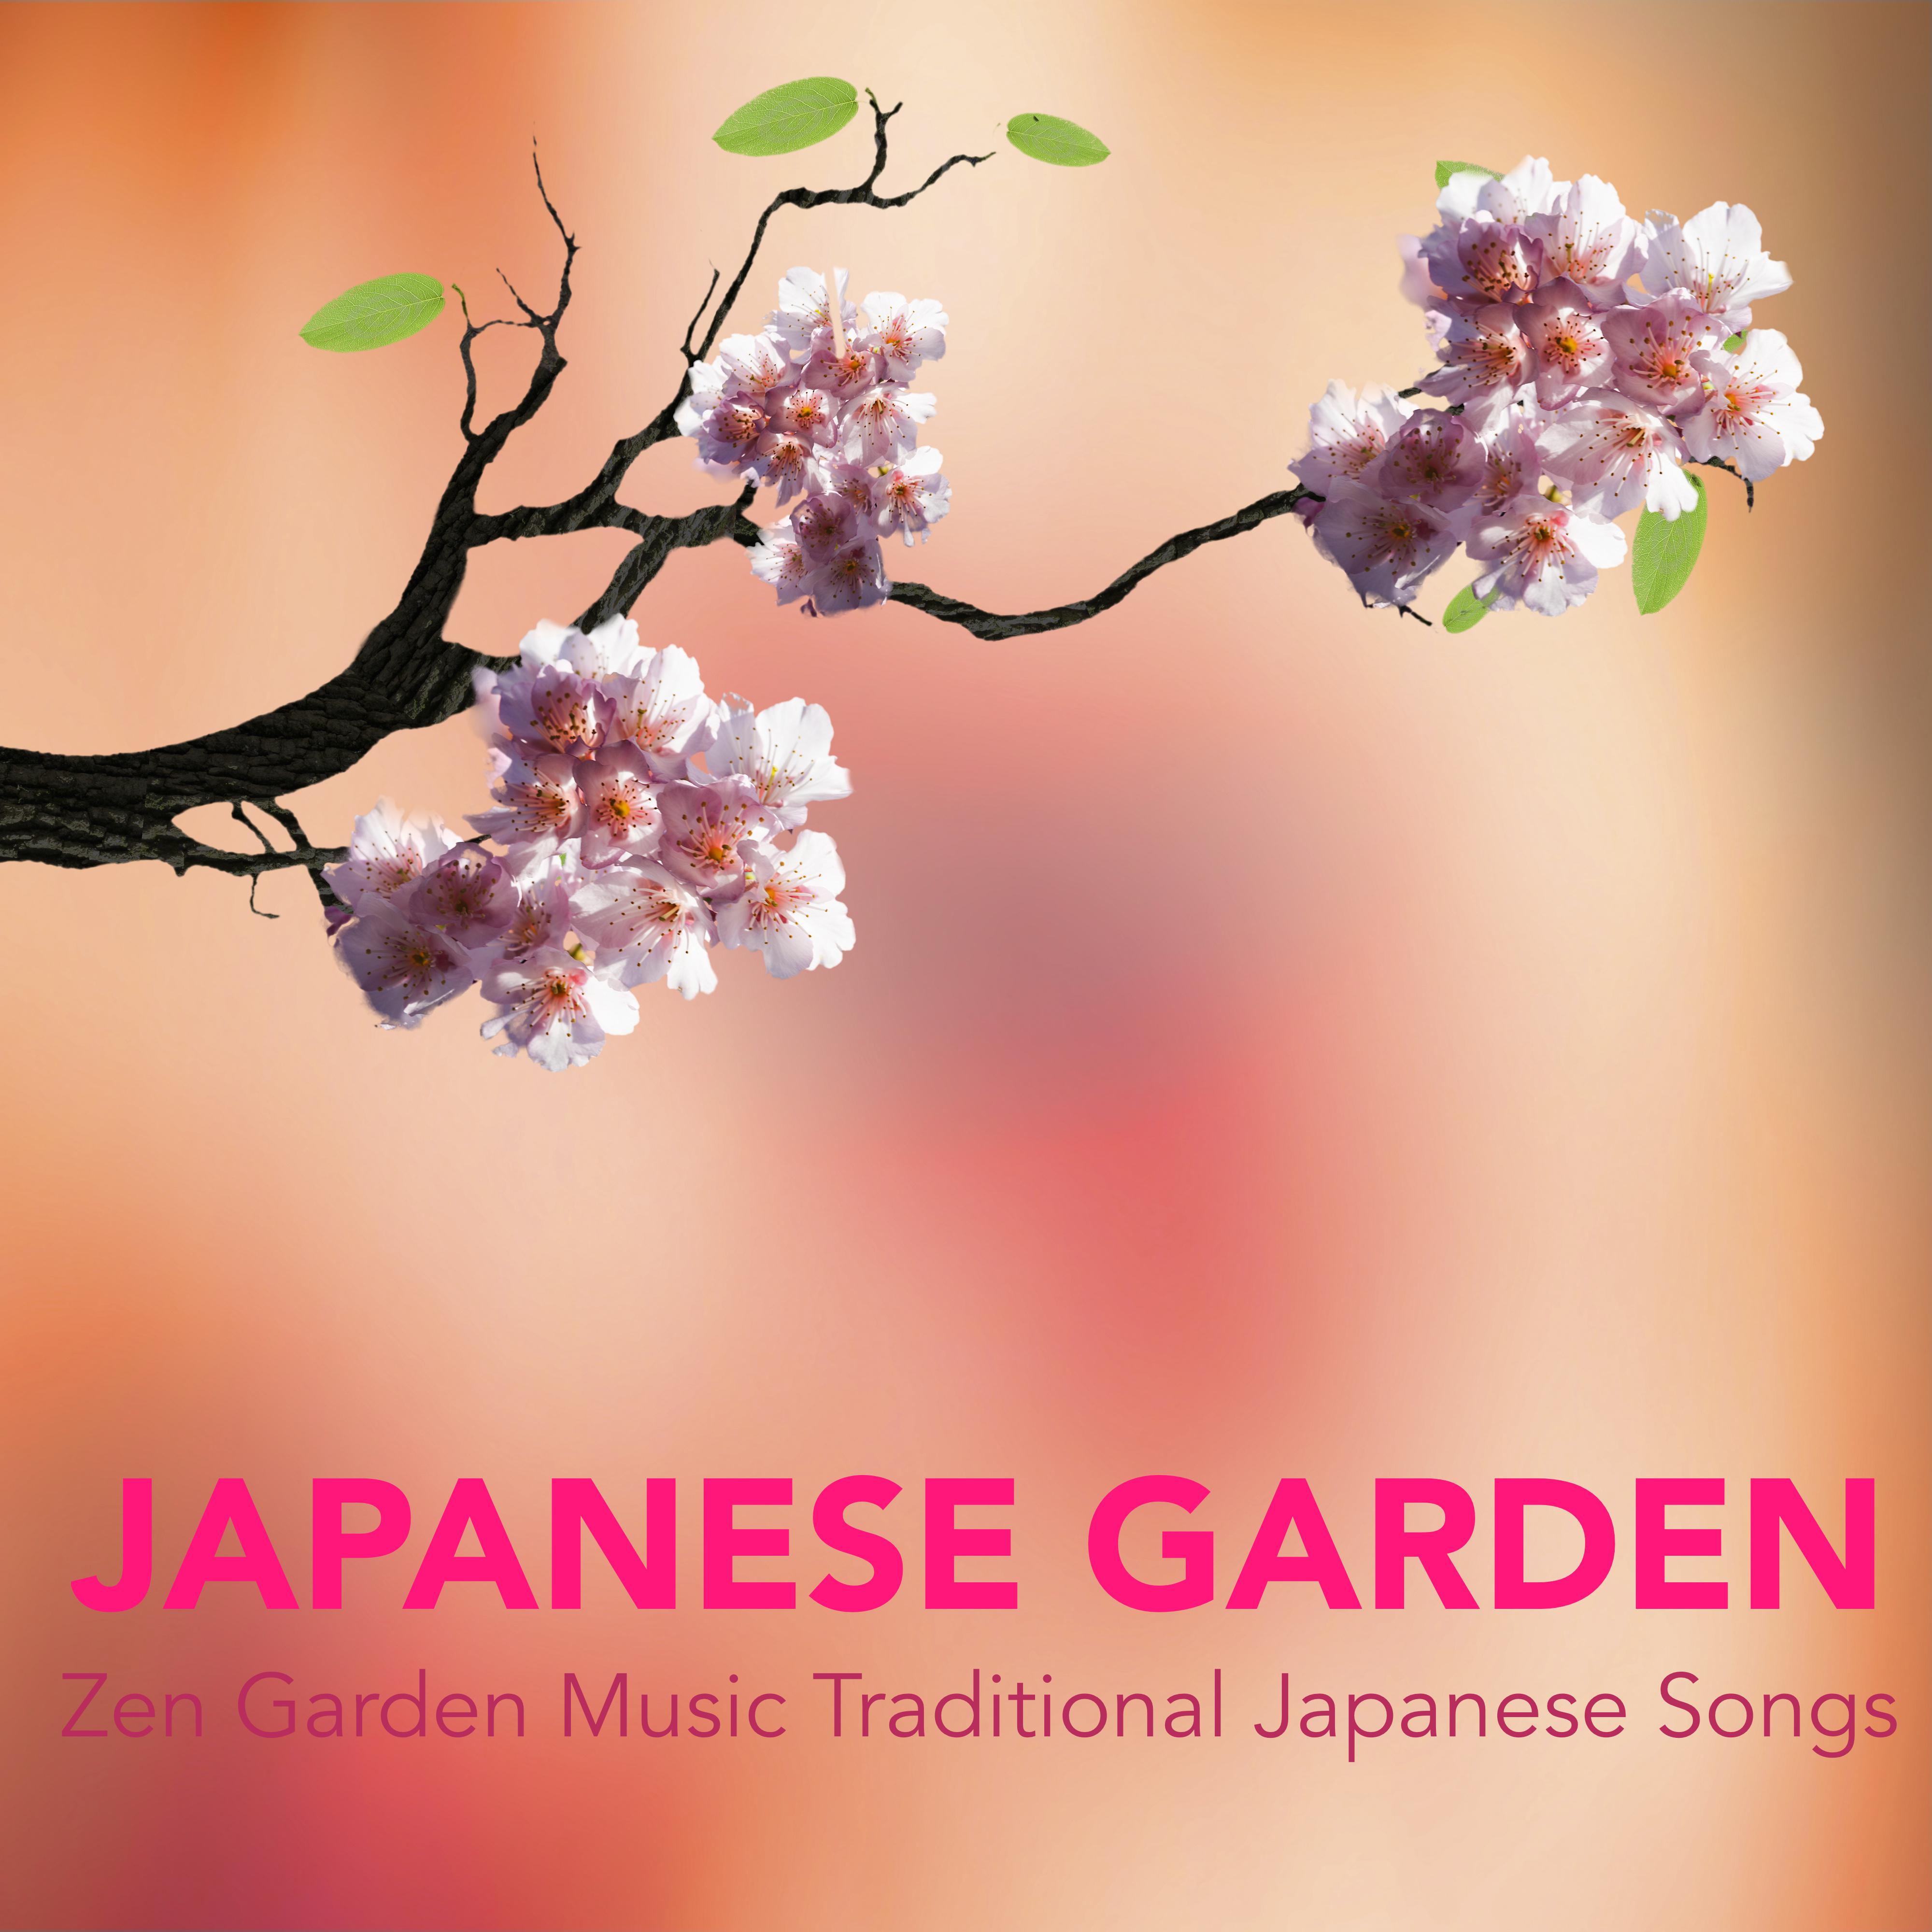 Japanese Garden - Zen Garden Music Traditional Japanese Songs